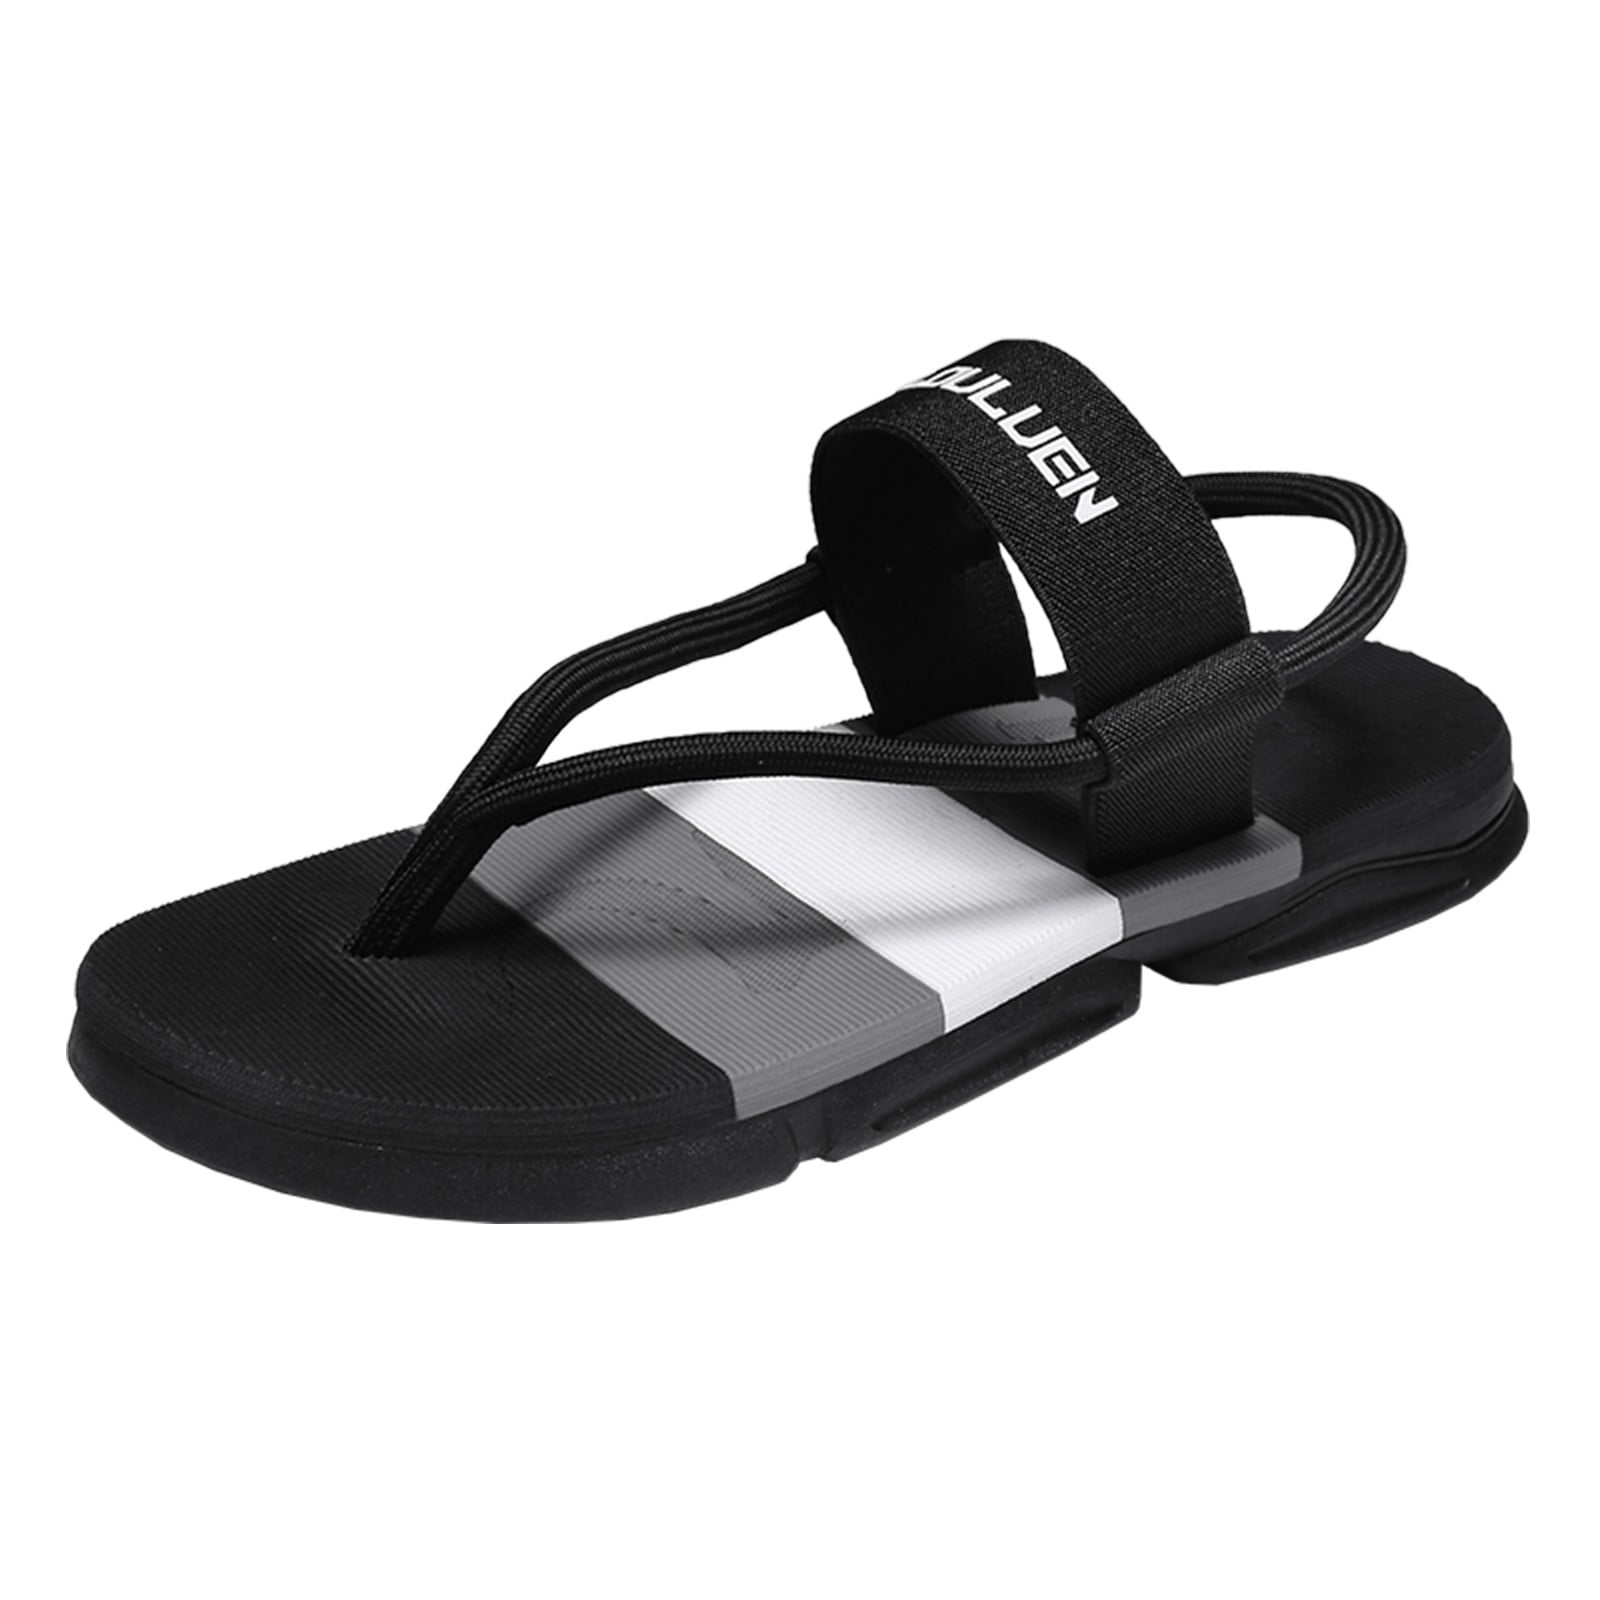 Pimfylm Mens Sandals Hiapo Men's Beach Sandals, Full-Grain Leather Flip ...